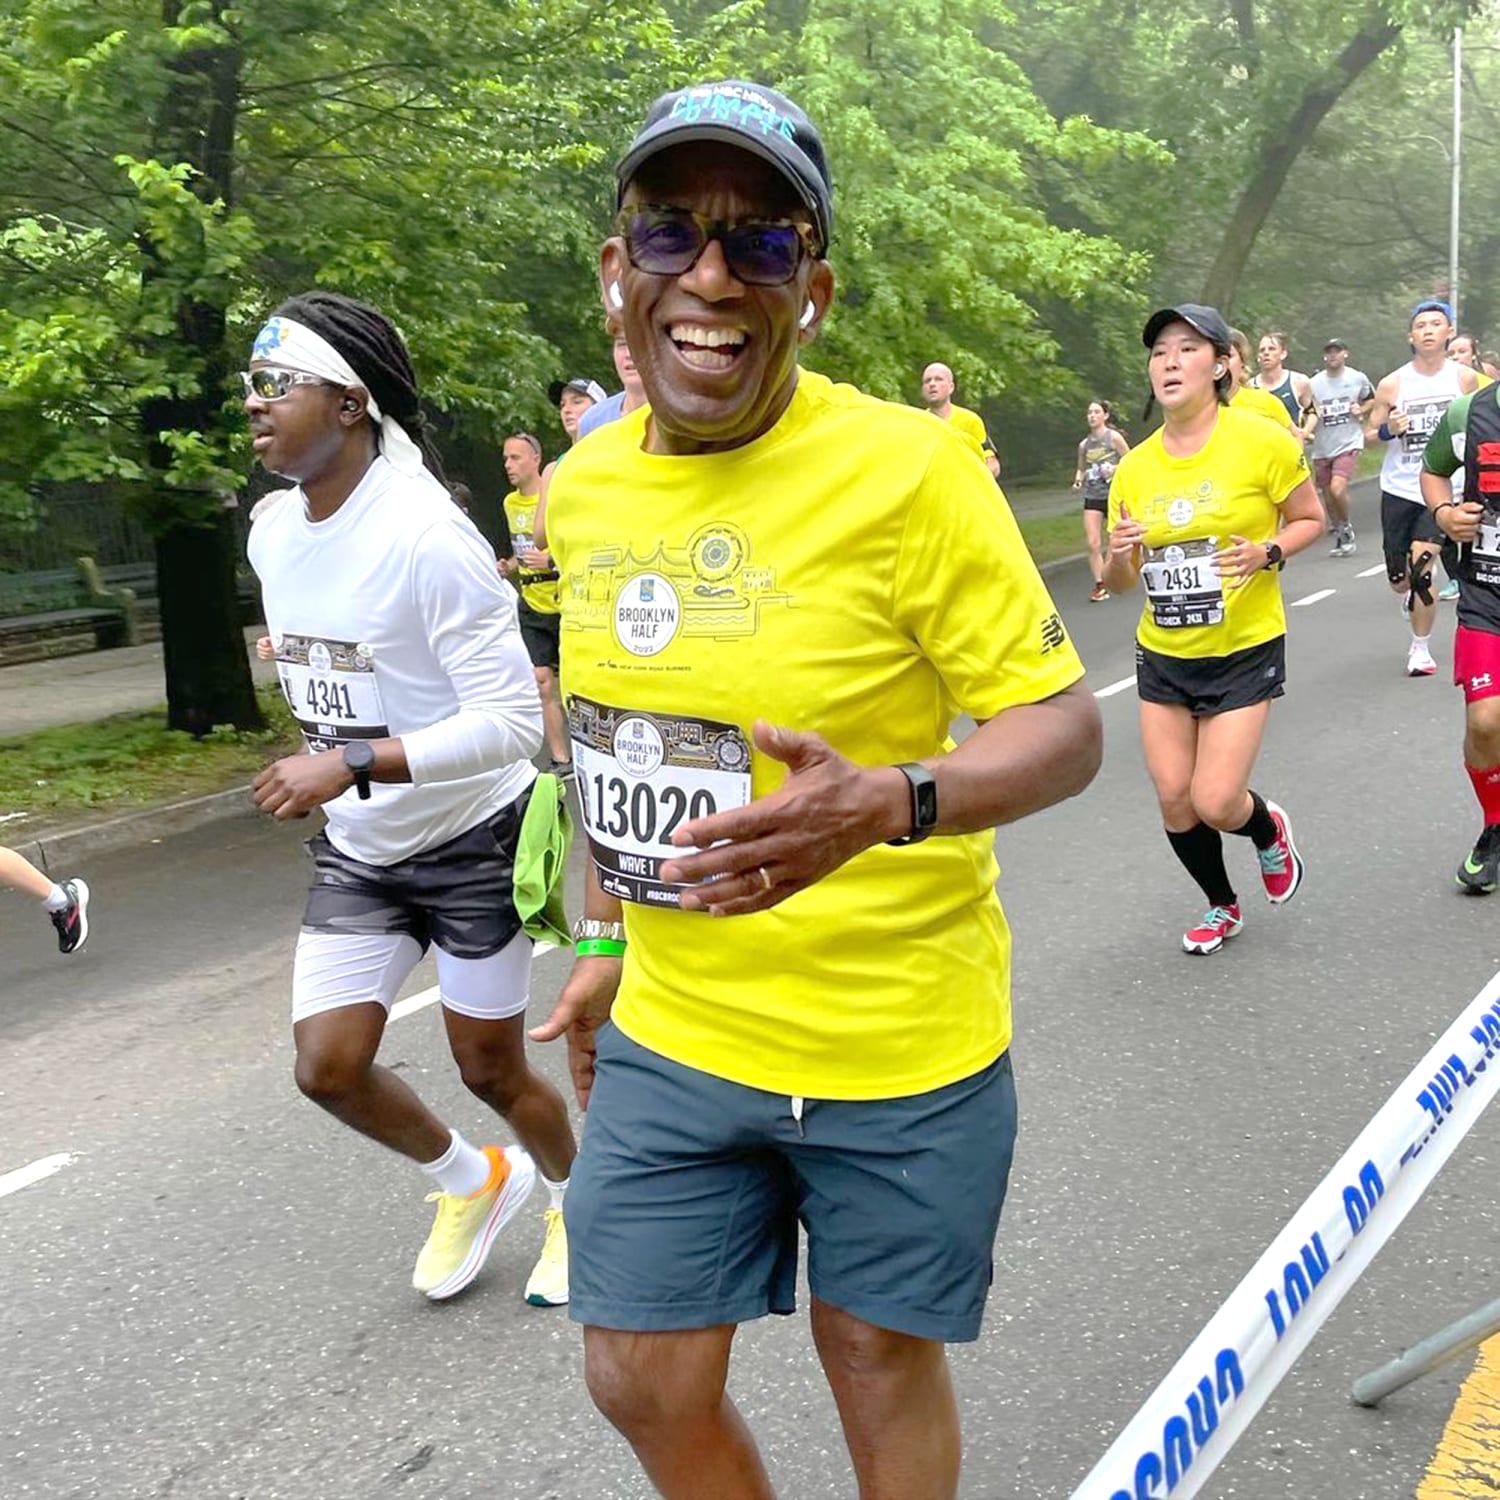 Al Roker successfully half-marathon: 'I did that!'